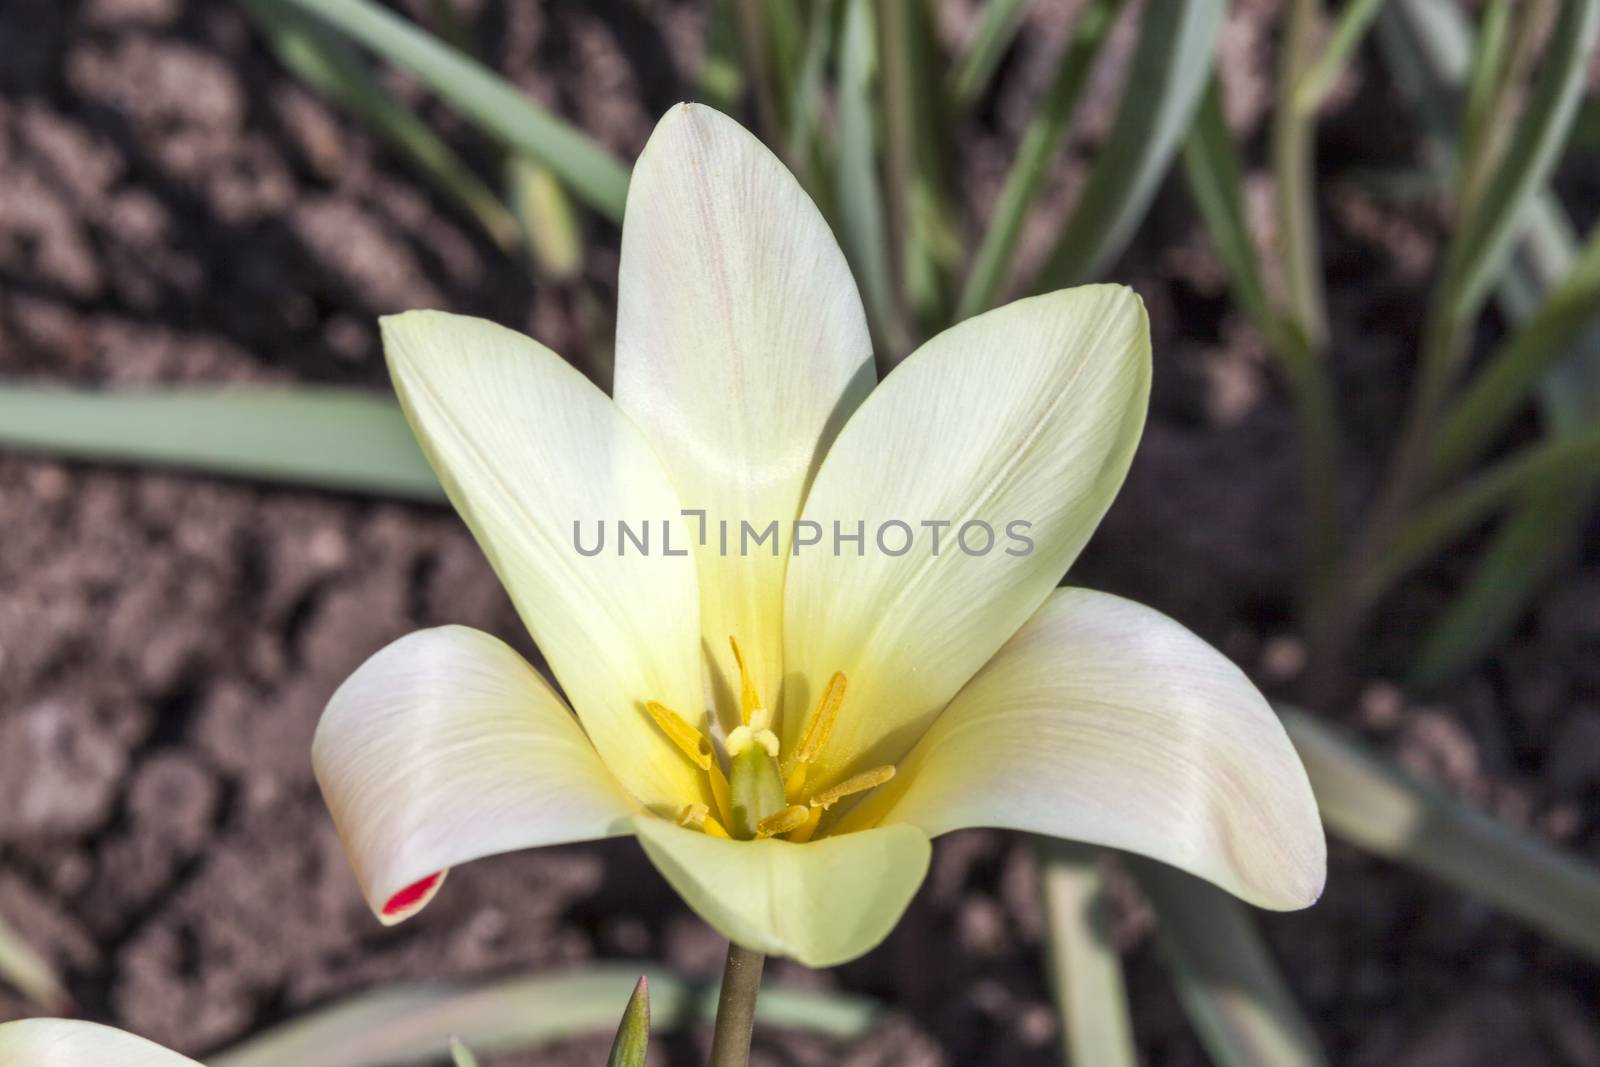 Tulip clusiana 'Tinka' a spring flowering bulb plant